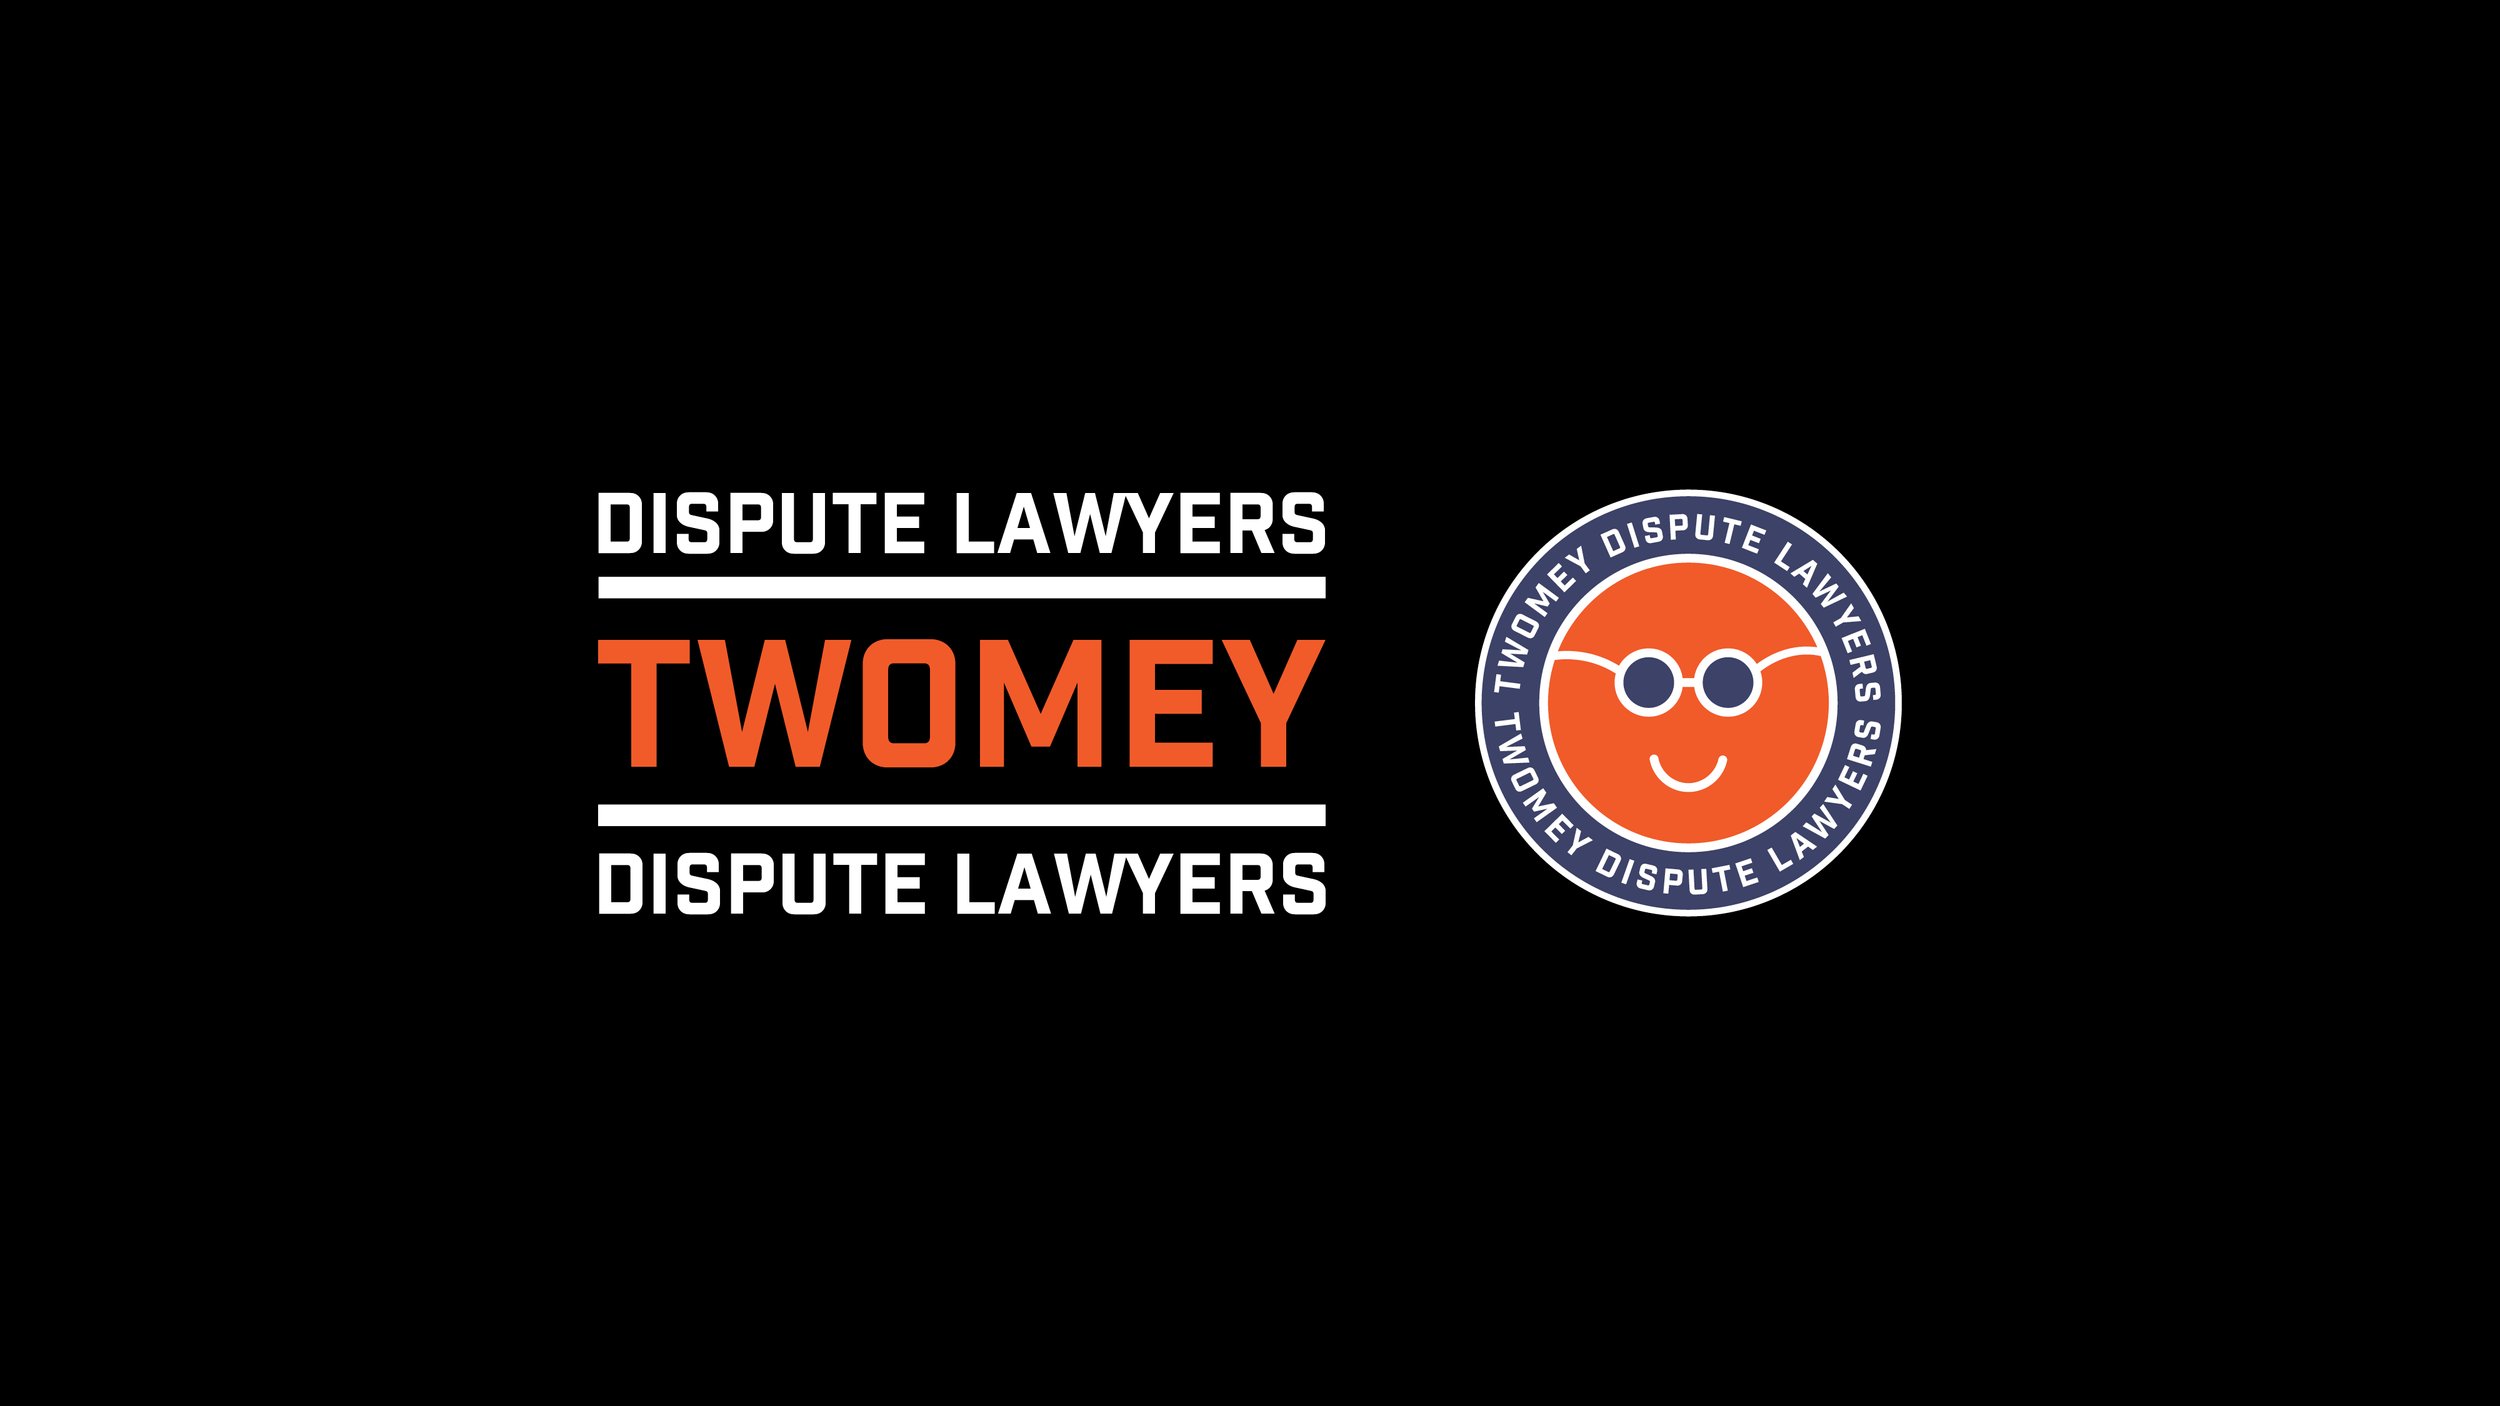 KK&O_Twomey Dispute Lawyers_Merch_Overview_v212.jpg